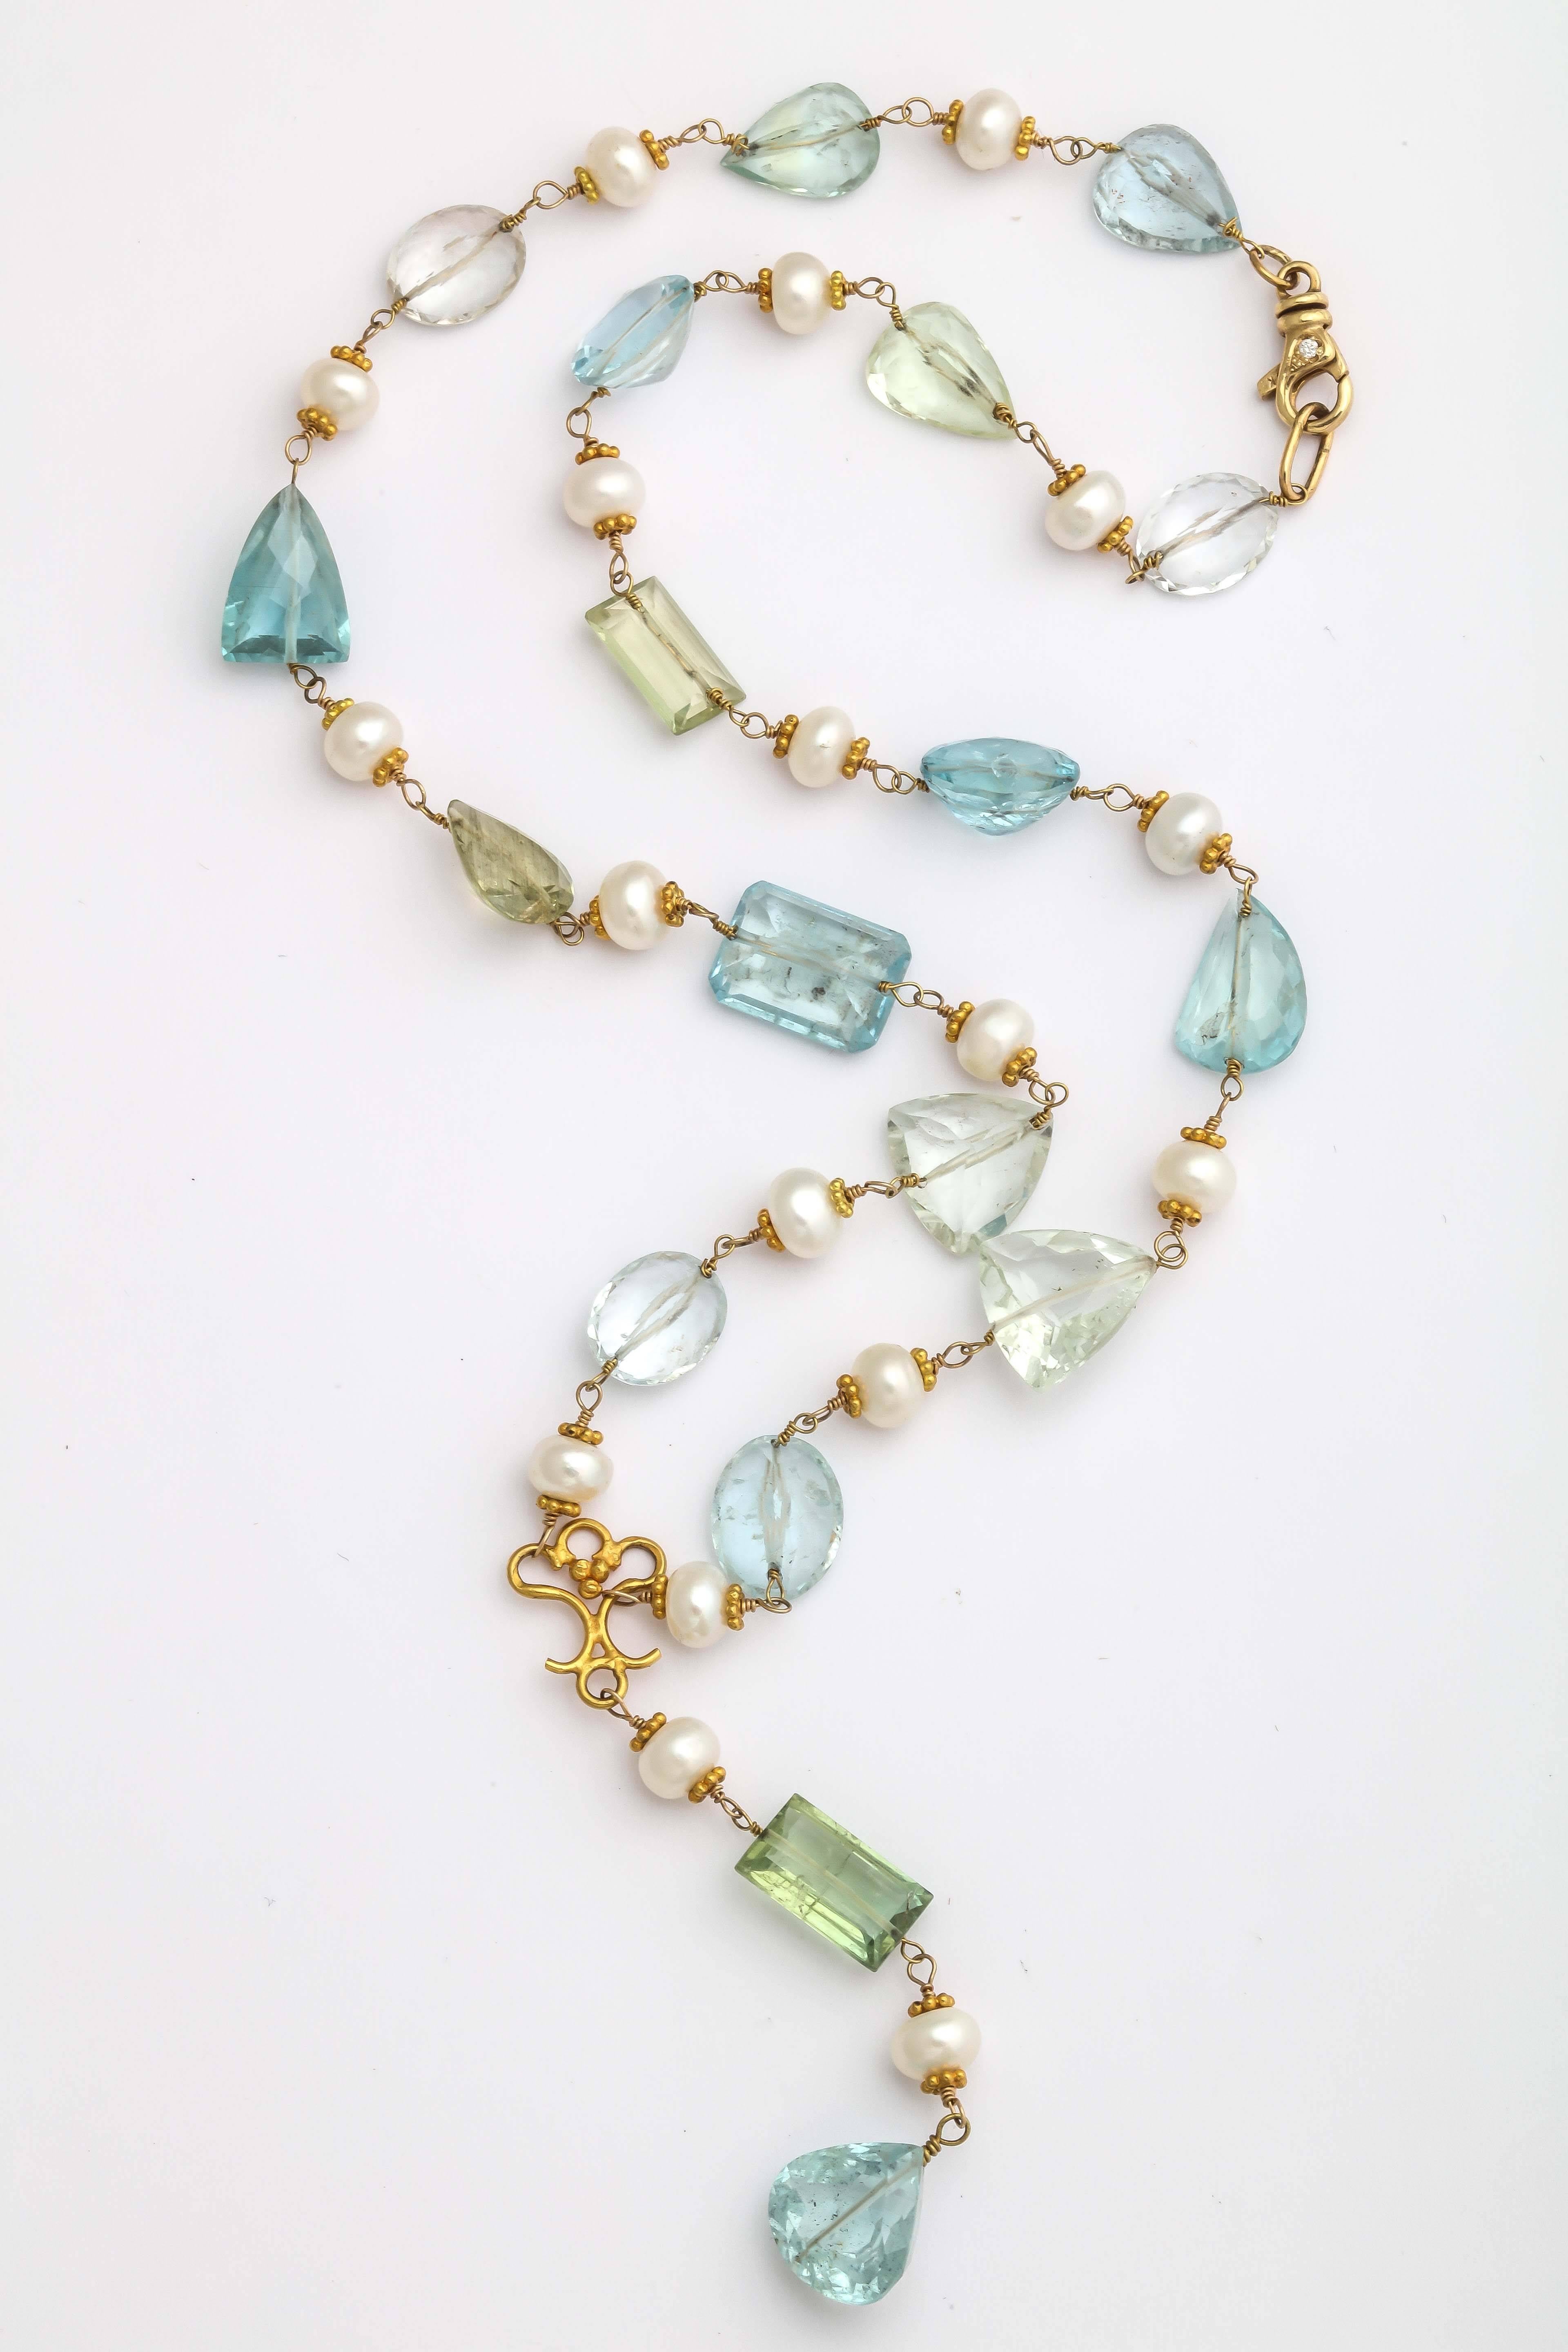 Stunning Aquamarine Bead Necklace. 1